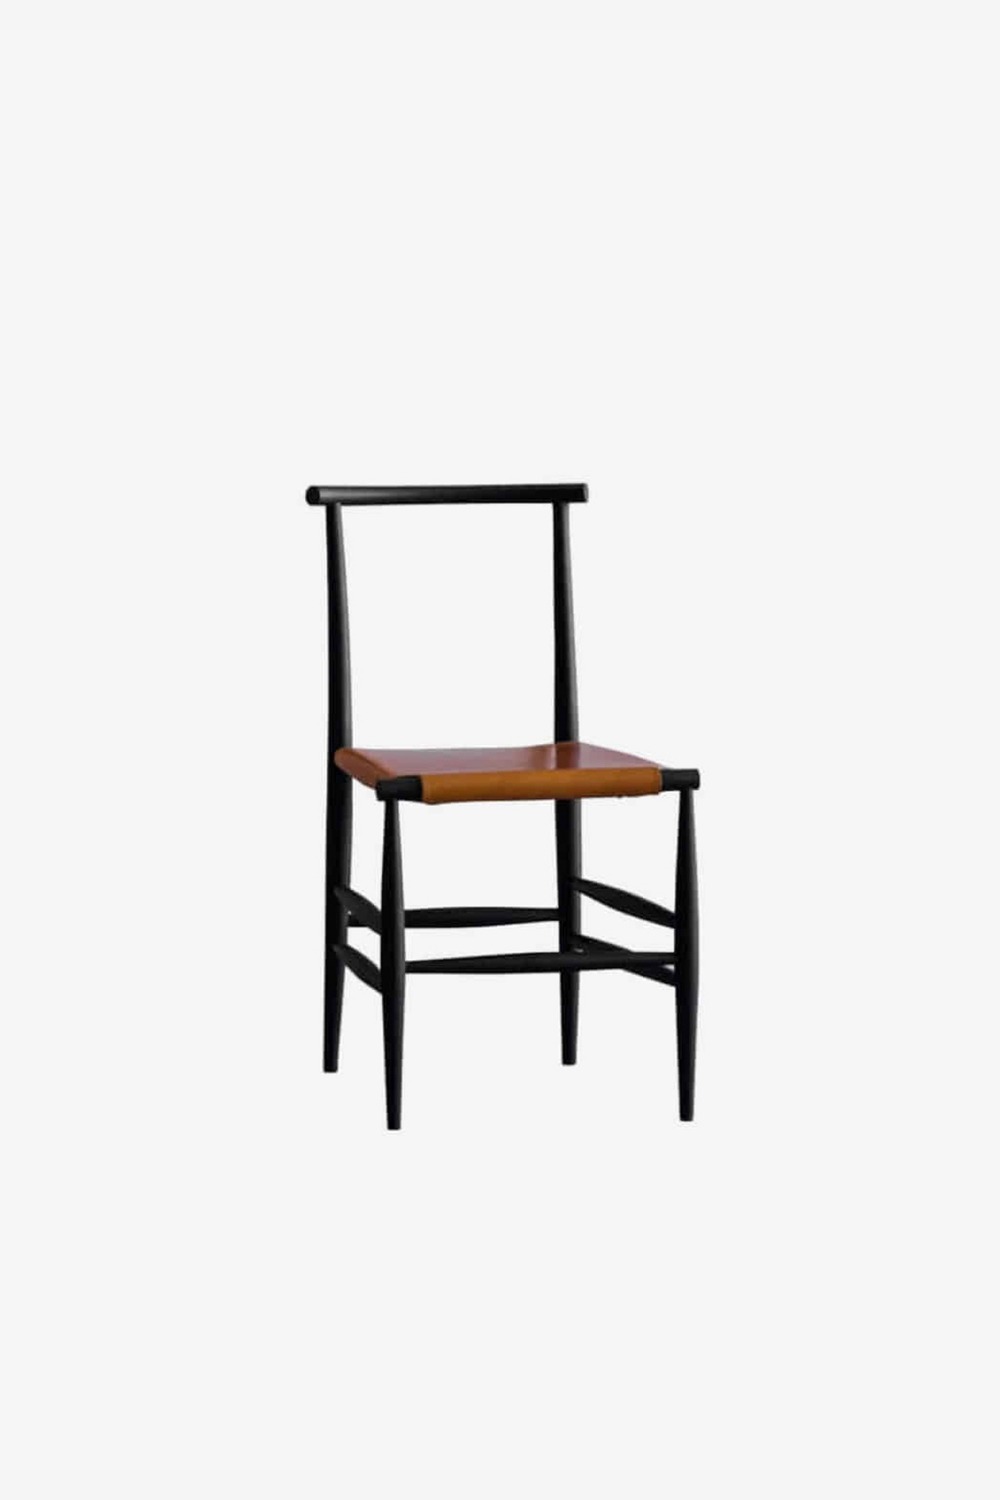 [Miniforms] Pelleossa Chair